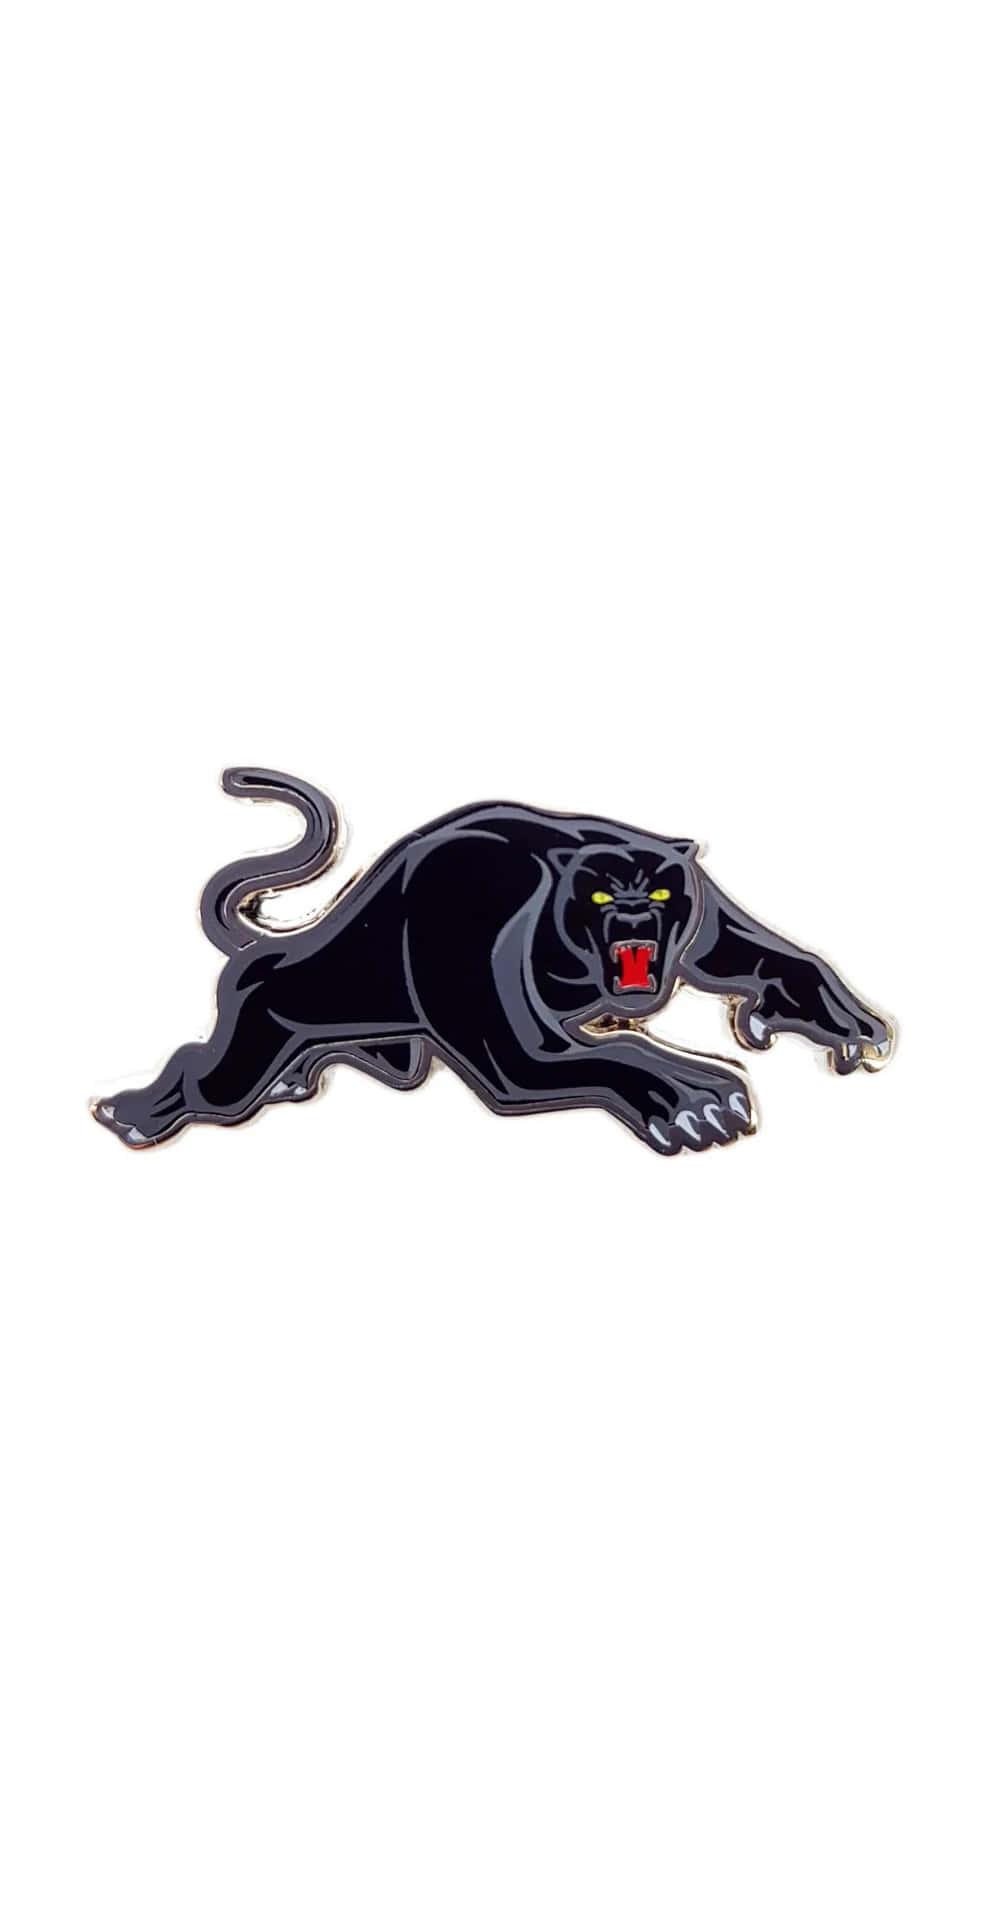 Penrith Panthers Wallpaper